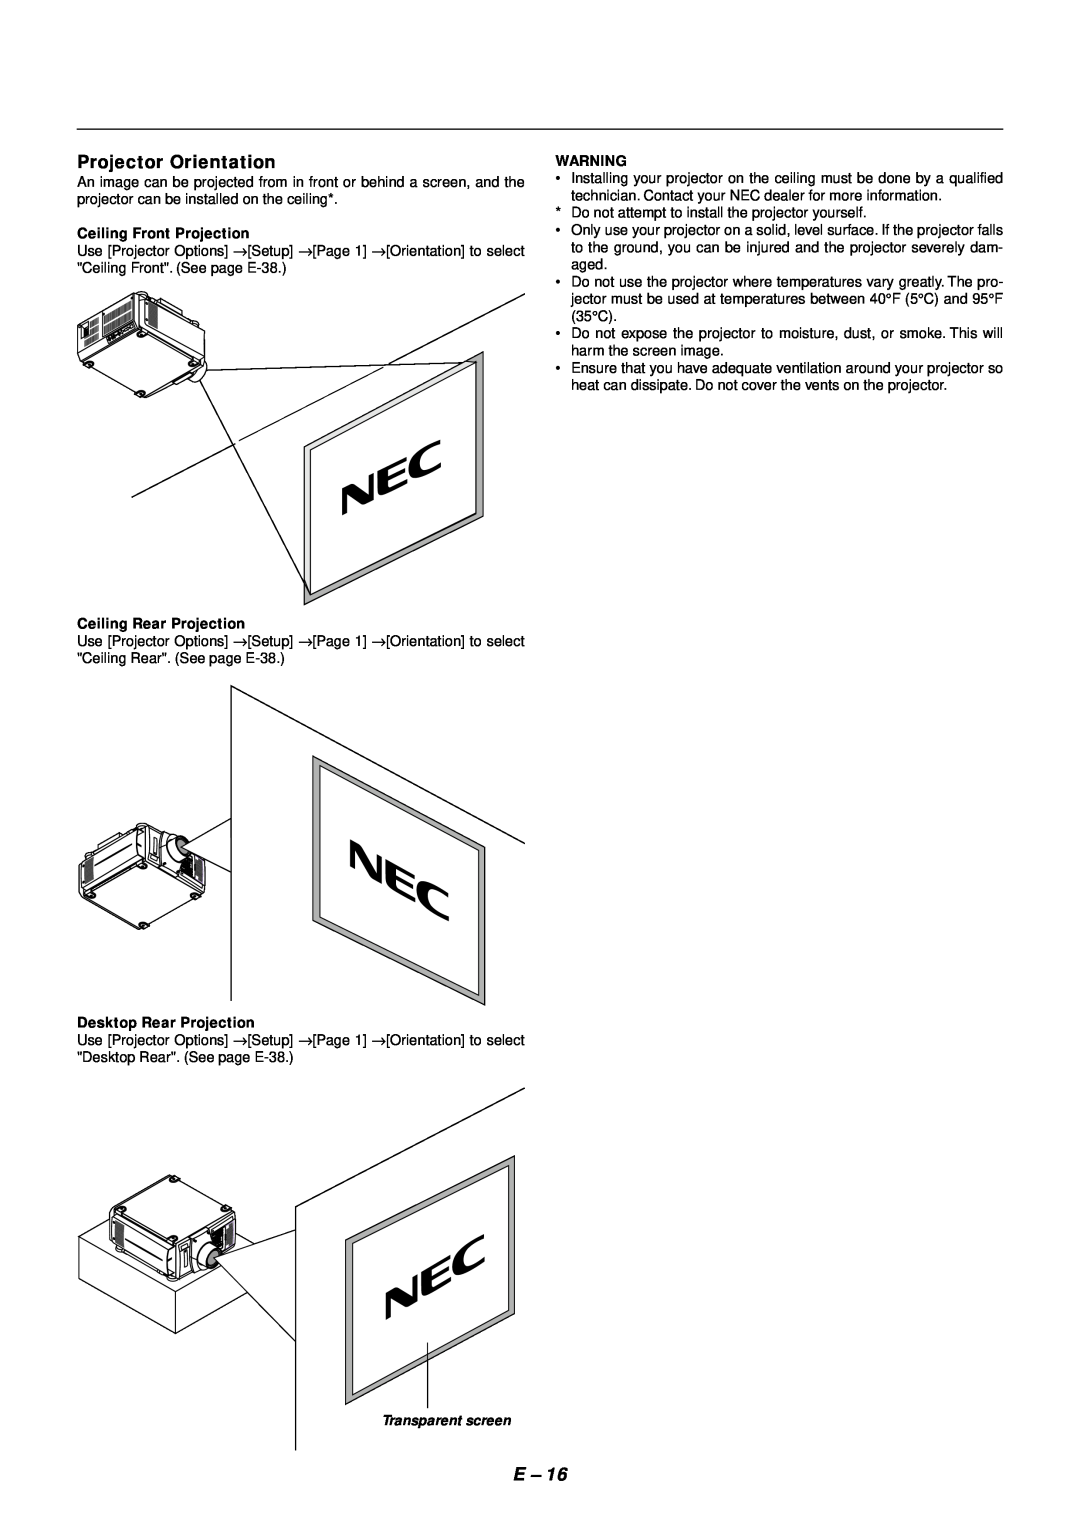 NEC SX4000 user manual Projector Orientation, Ceiling Front Projection, Ceiling Rear Projection, Desktop Rear Projection 